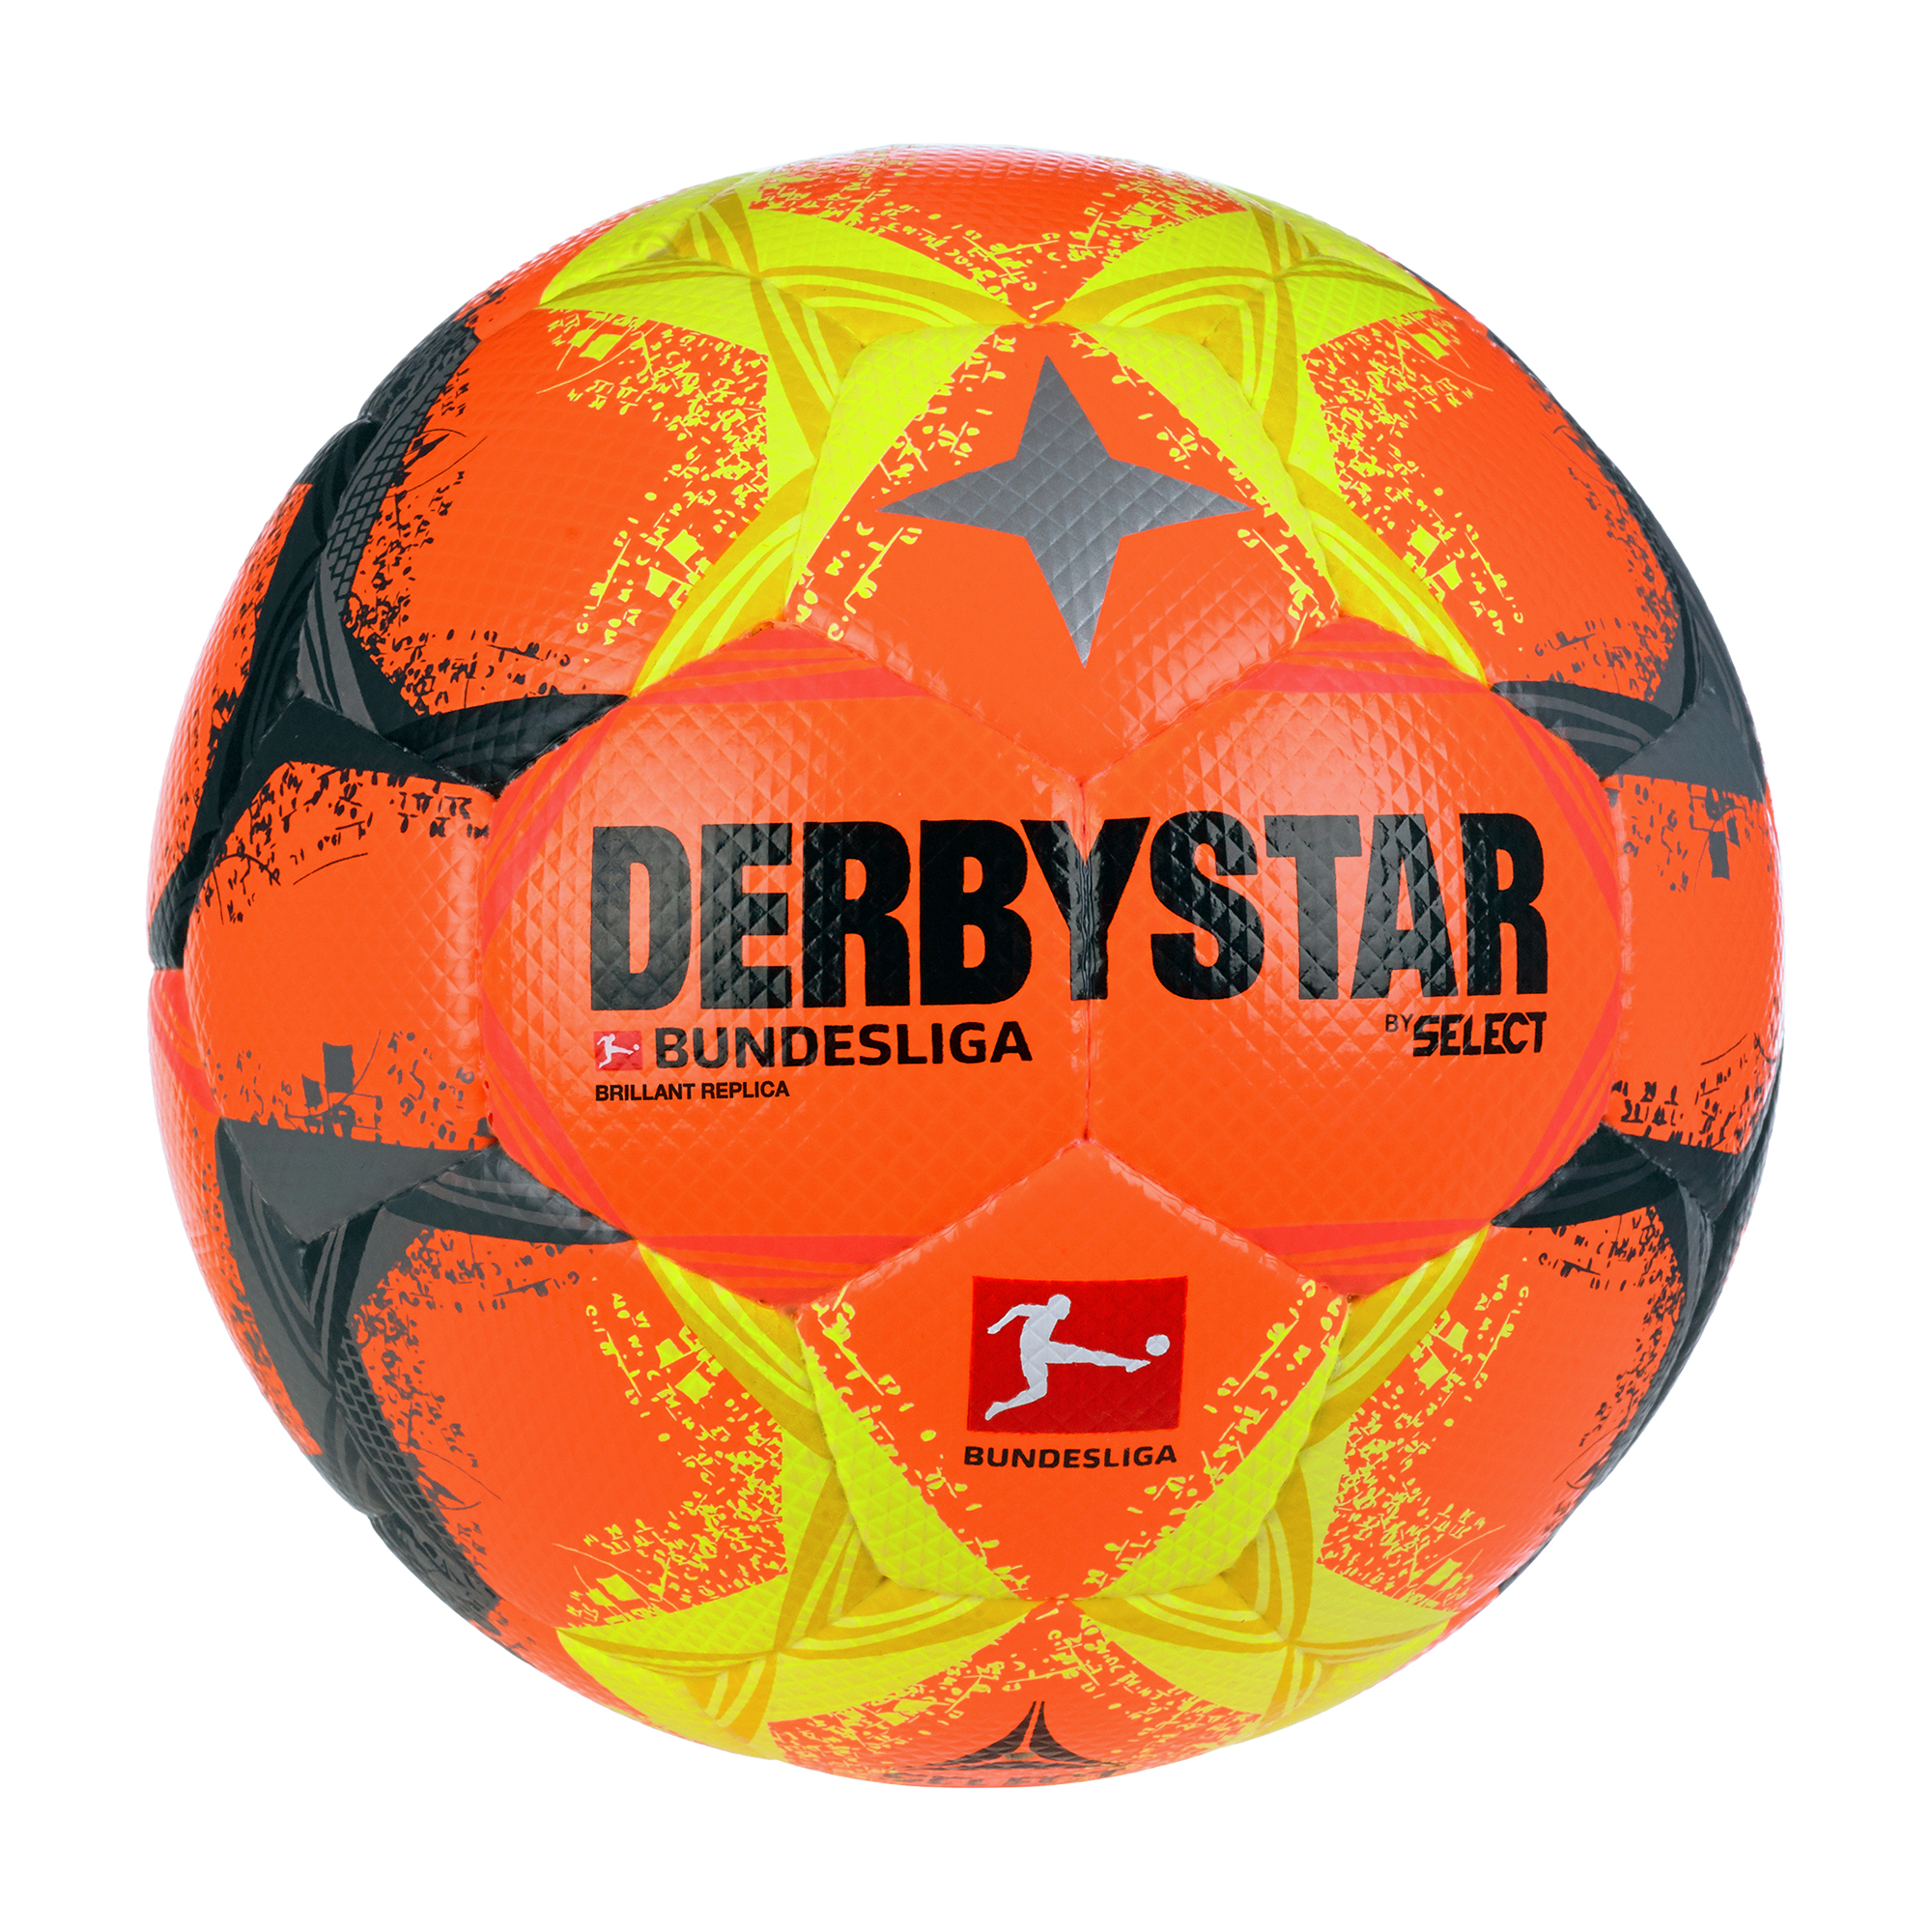 Derbystar Bundesliga Brillant Replica High Visible v22